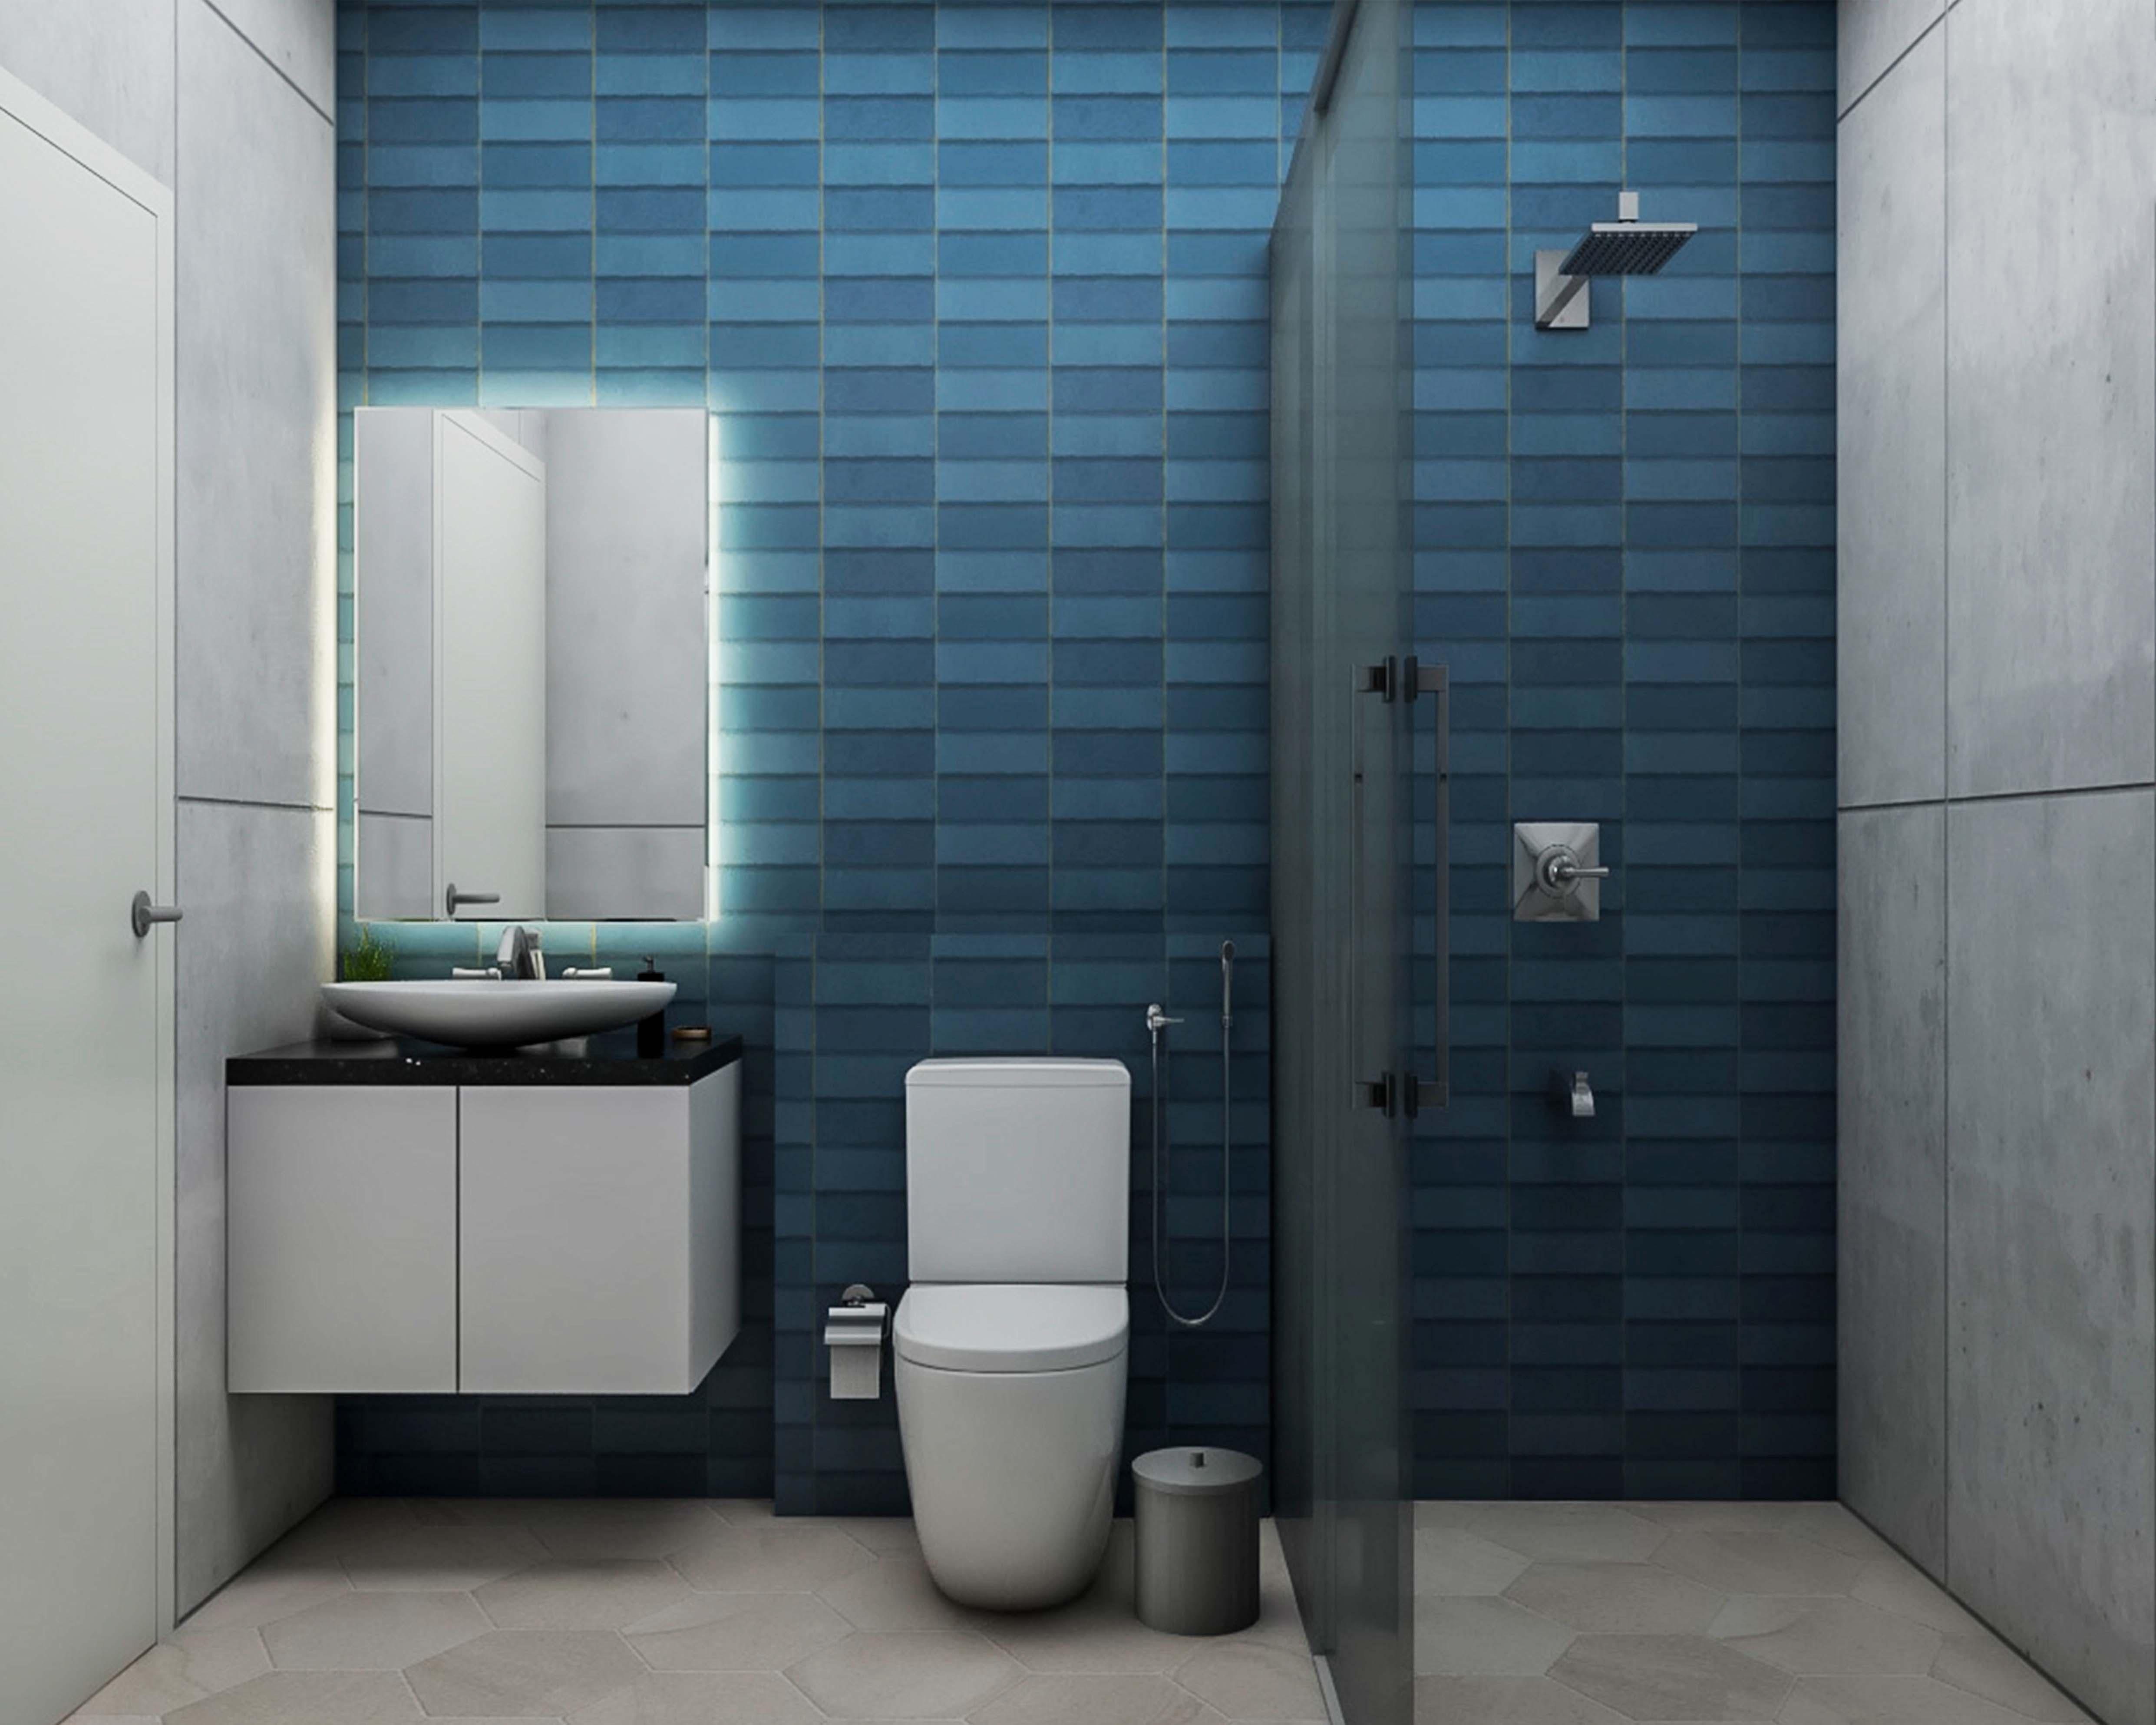 Contemporary Small Bathroom Design Idea With Hexagon-Patterned Floor Tiles